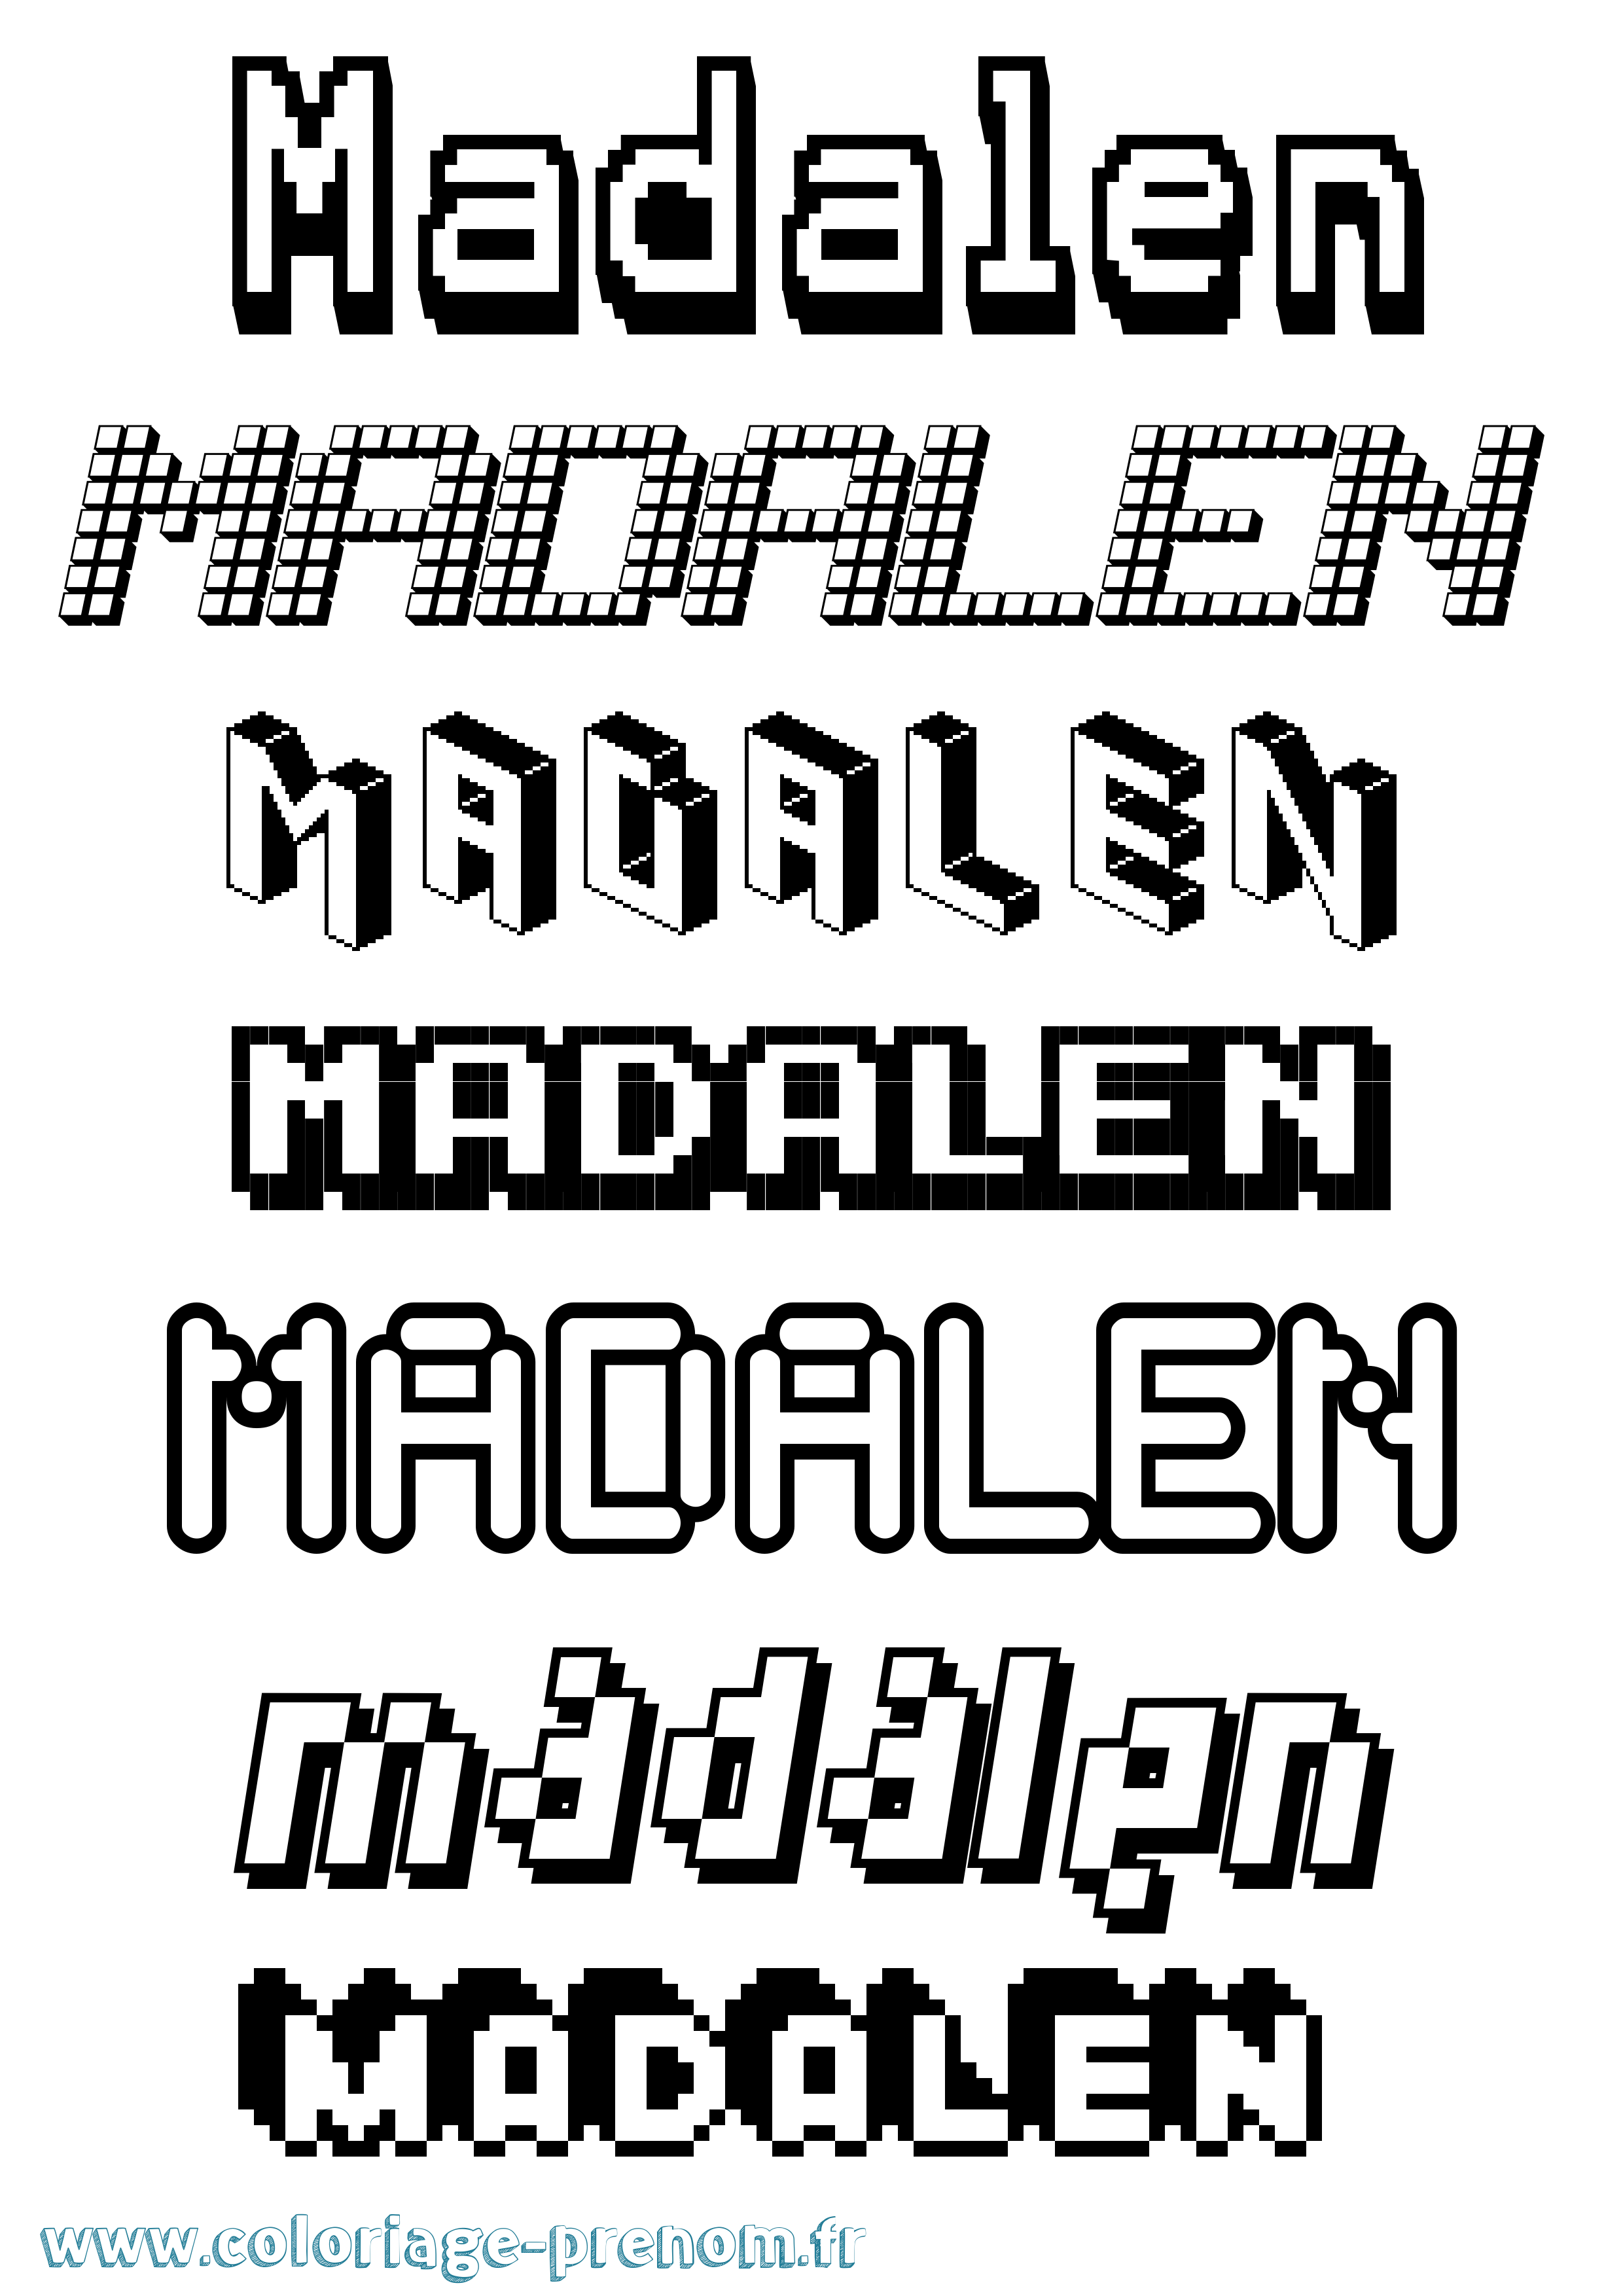 Coloriage prénom Madalen Pixel